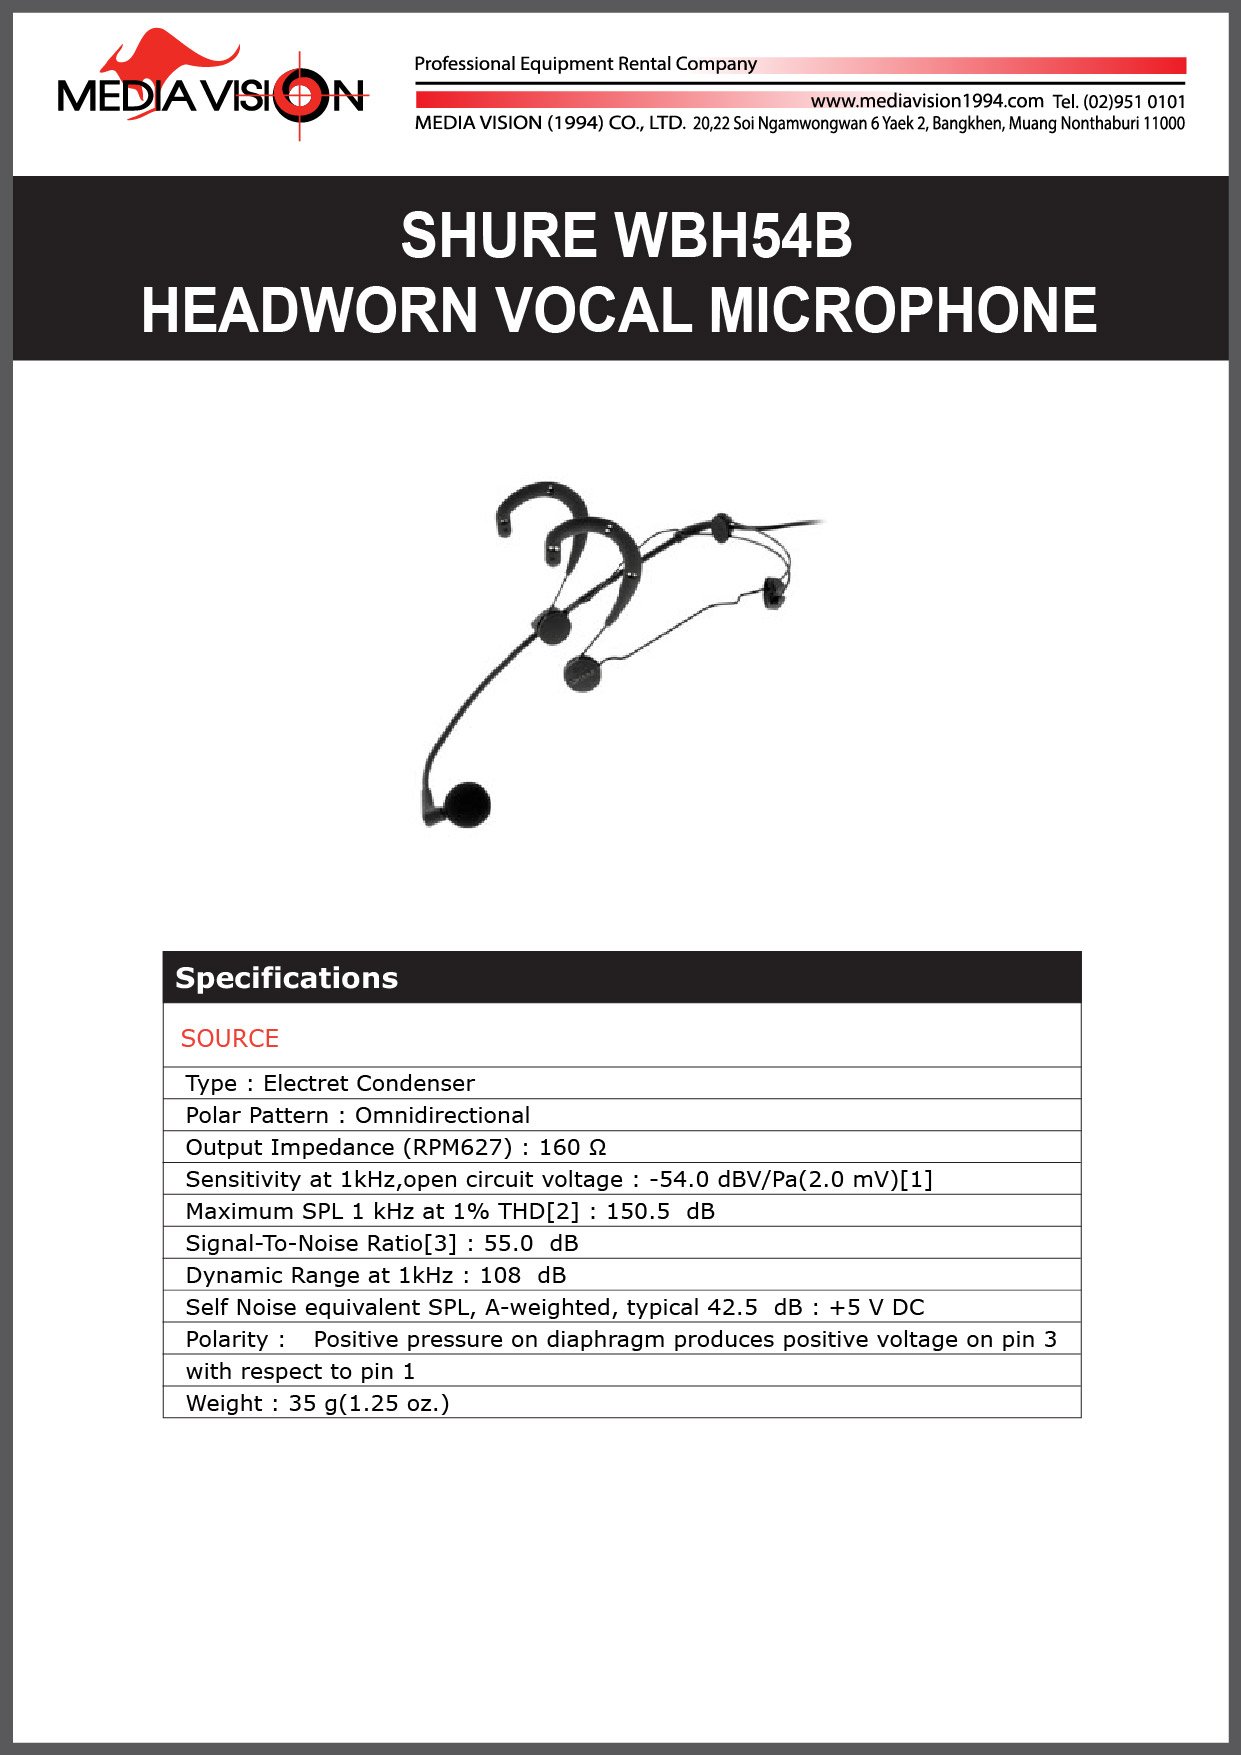 SHURE WBH54B HEADWORN VOCAL MICROPHONE